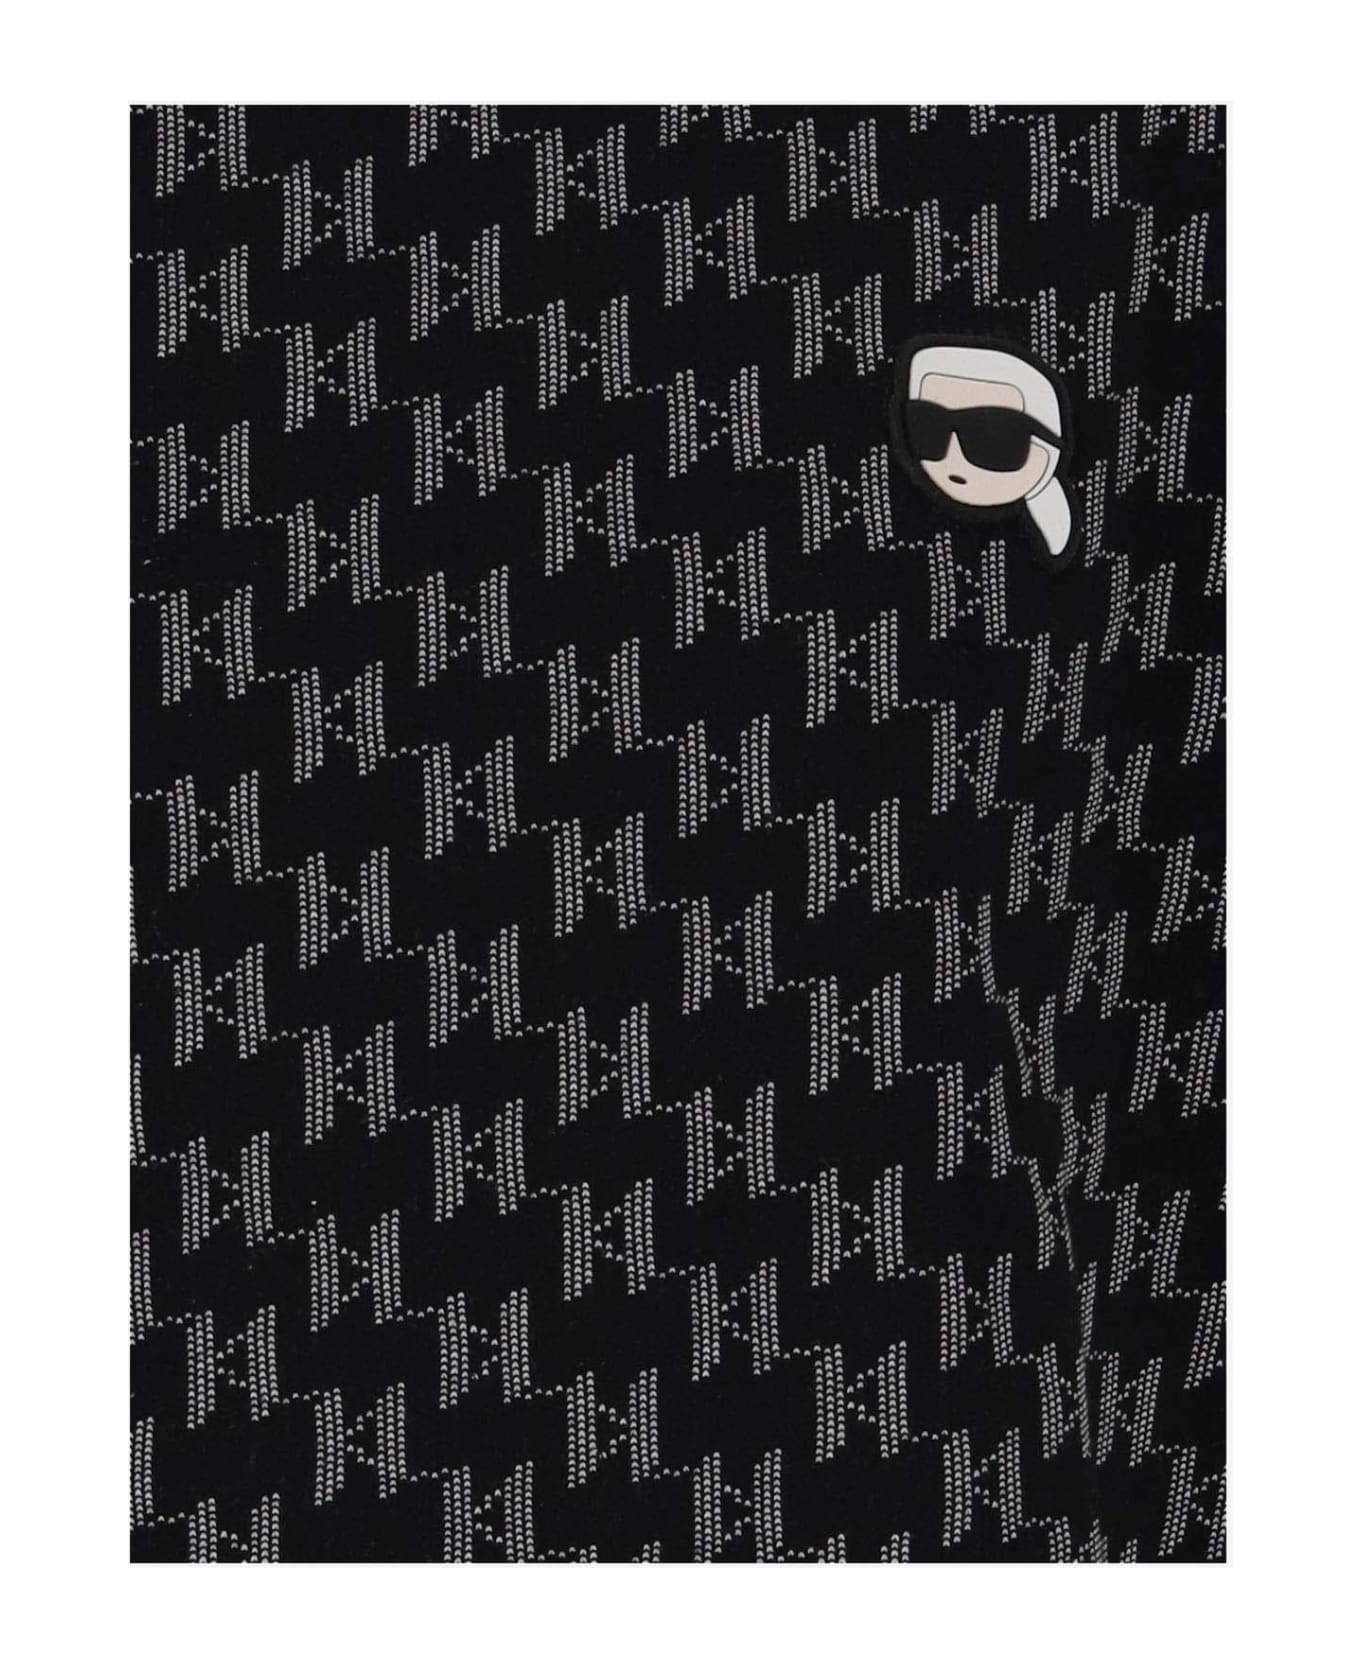 Karl Lagerfeld Monogrammed Cotton Sweatshirt - Black